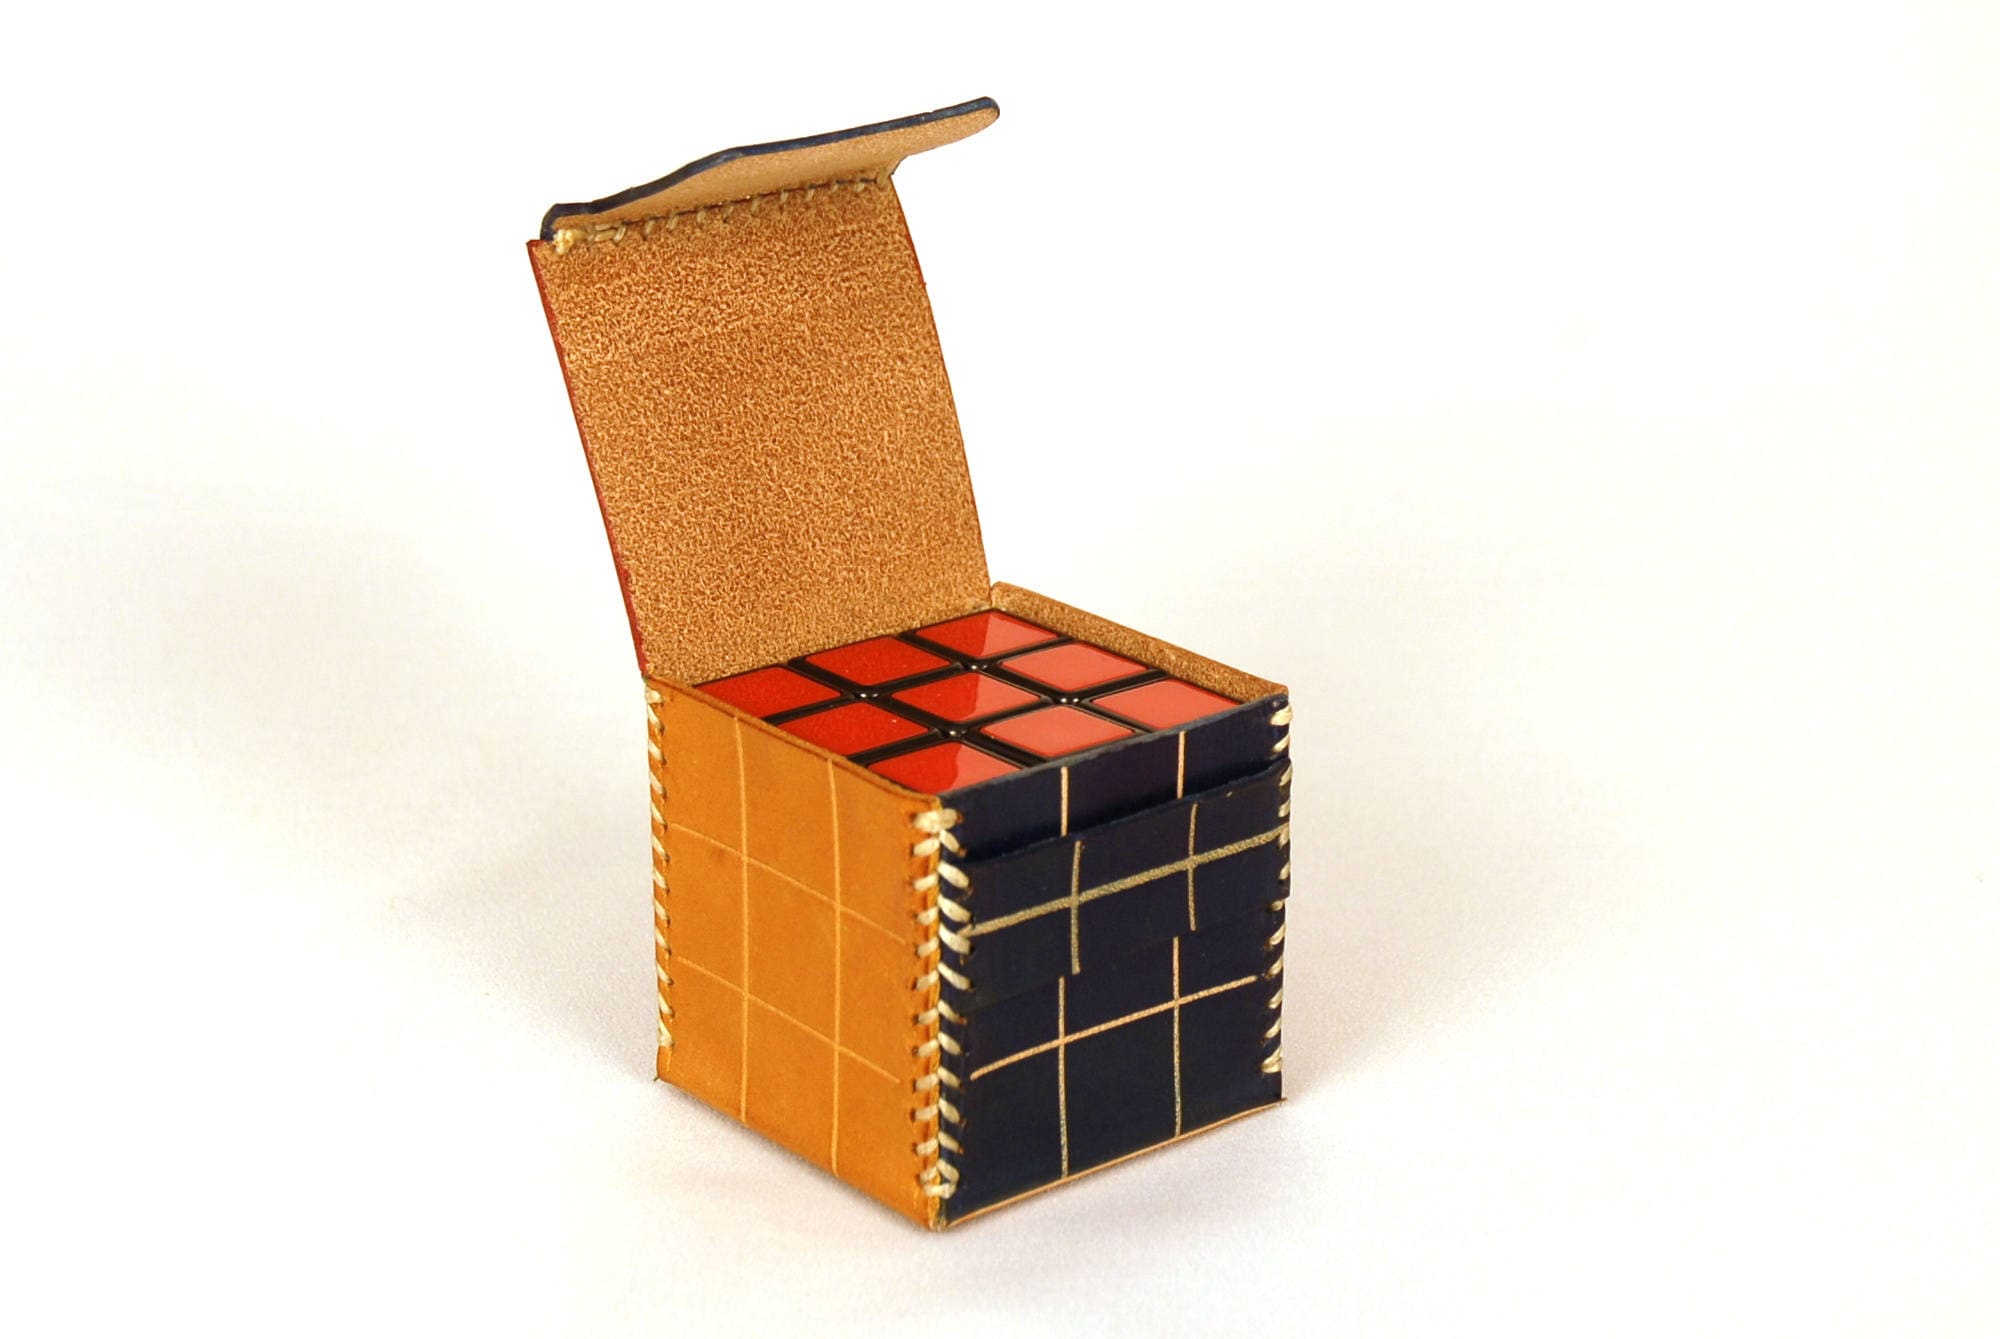 Rubik Black Box Calf Leather - BY FAR